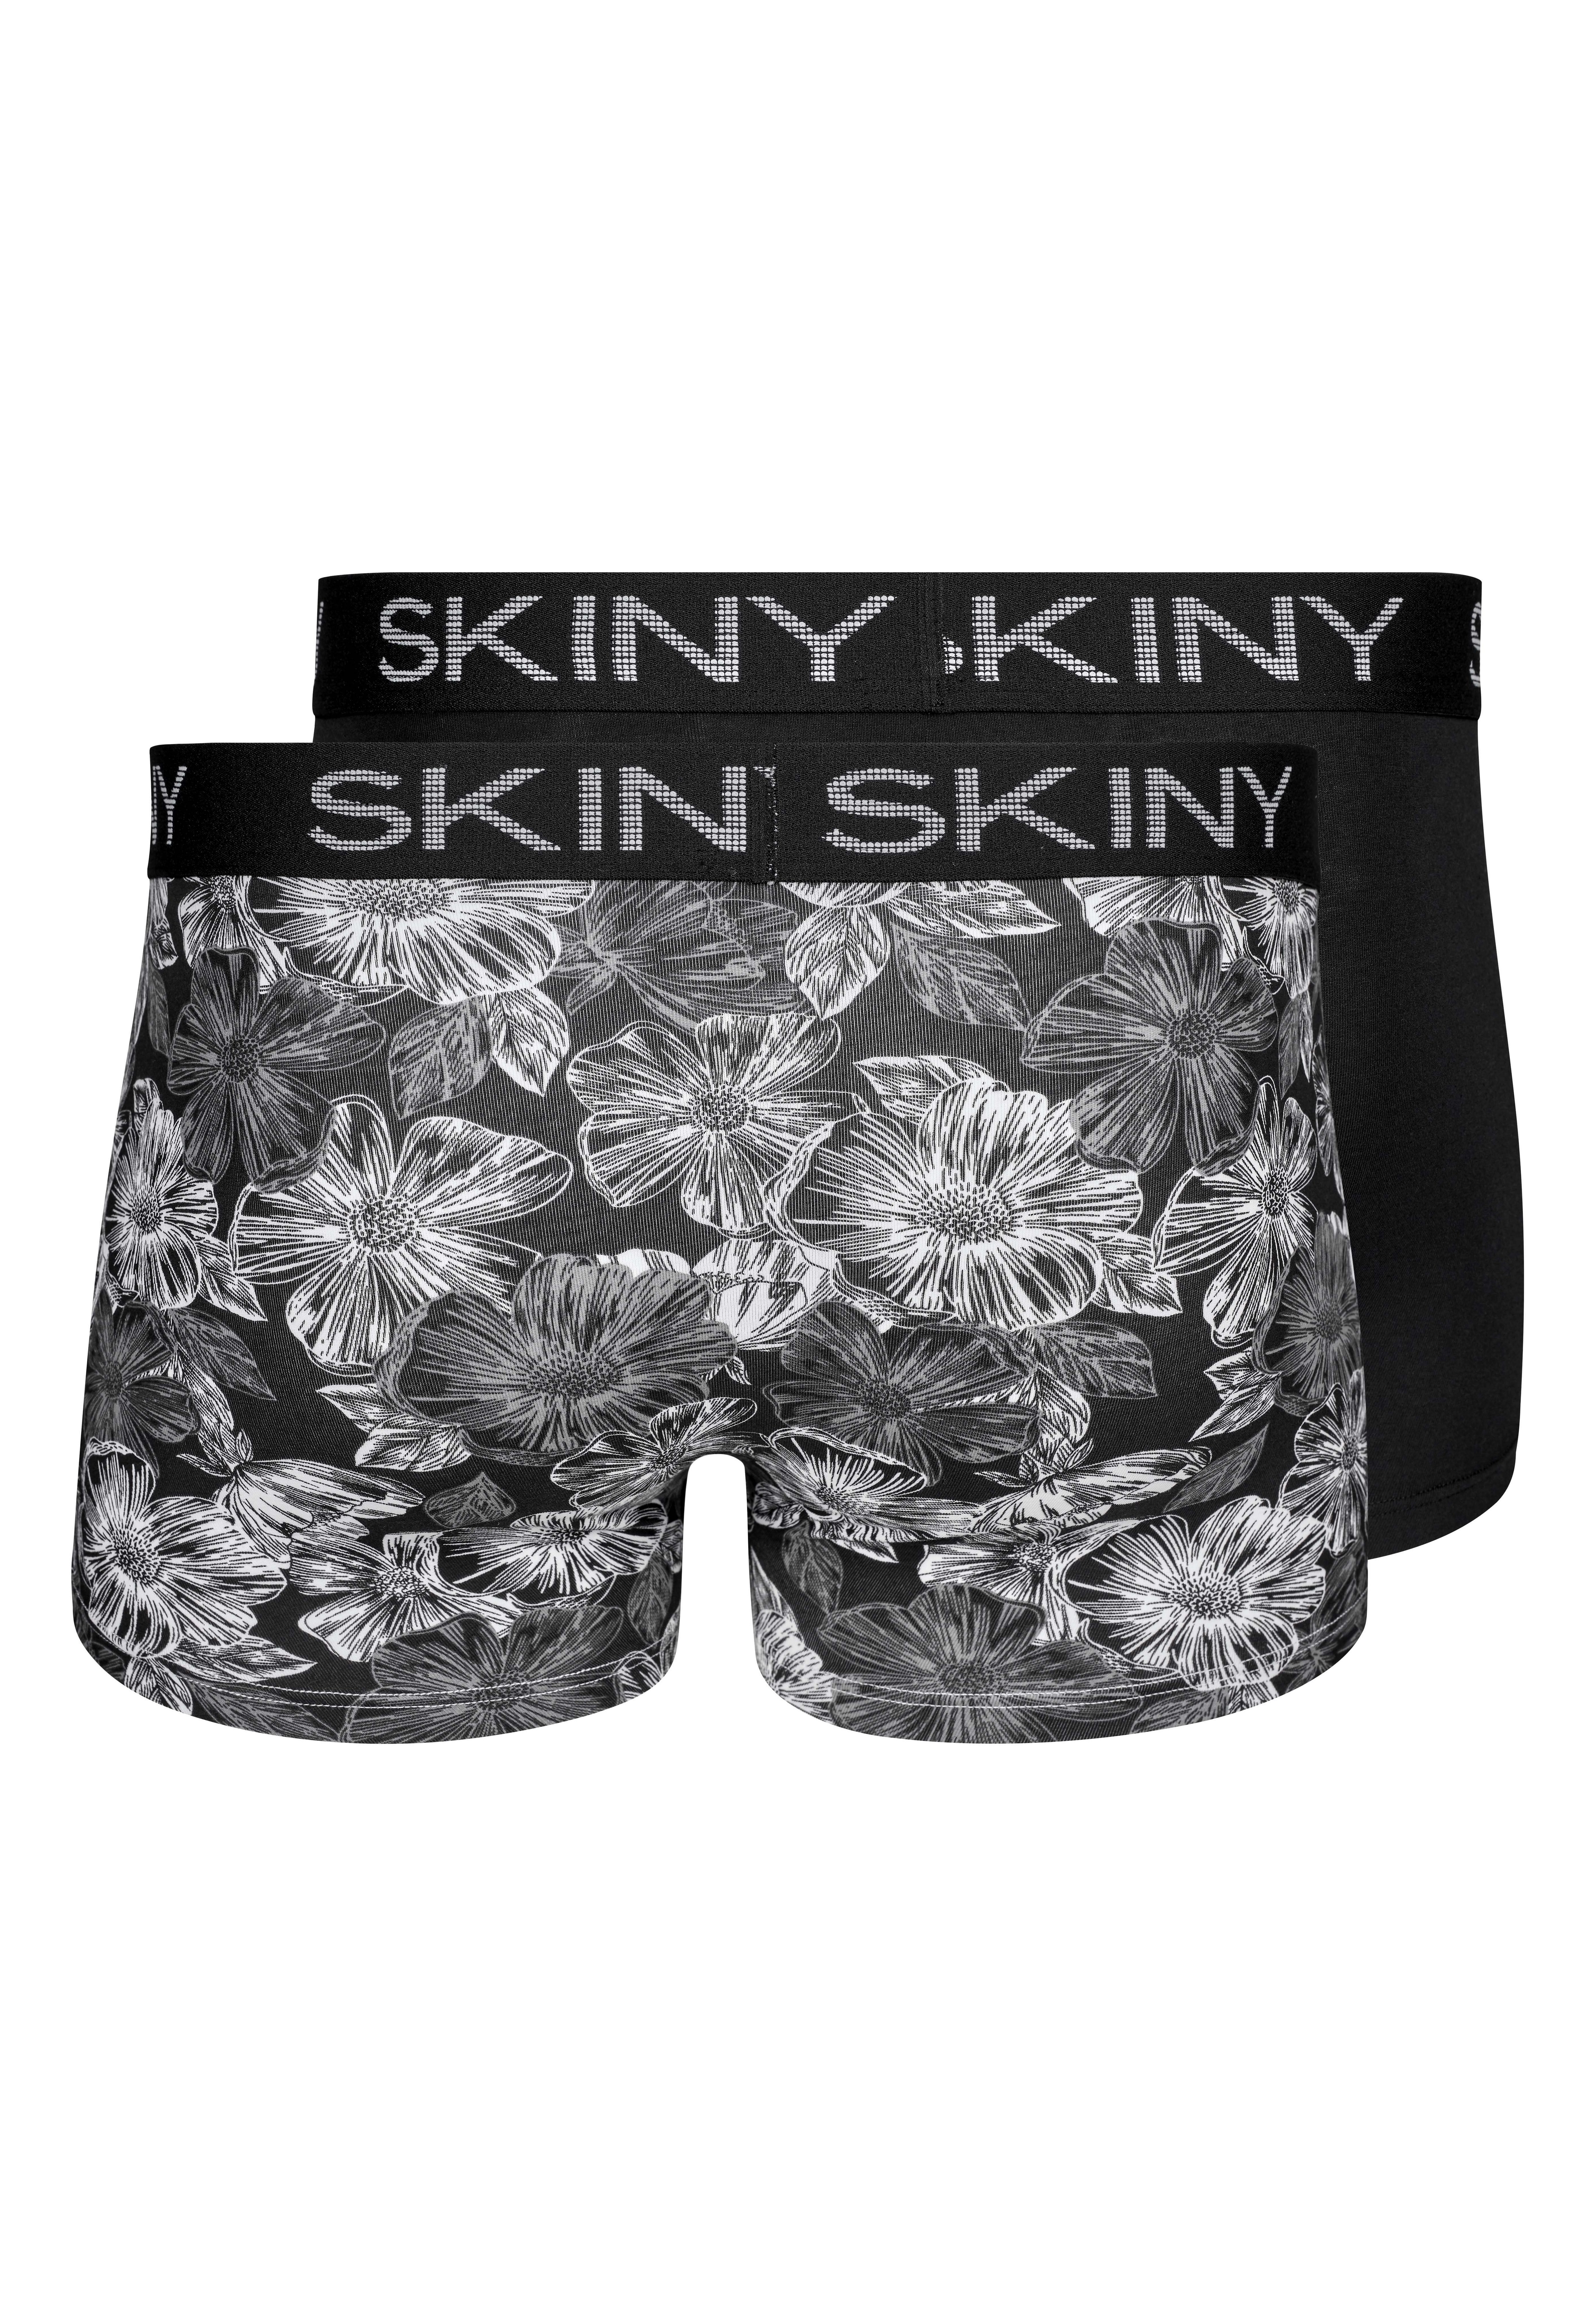 Skiny Retro Pants Doppelpack (2-St) schwarz/weiß 2er schwarz Herren Pack Boxershorts 